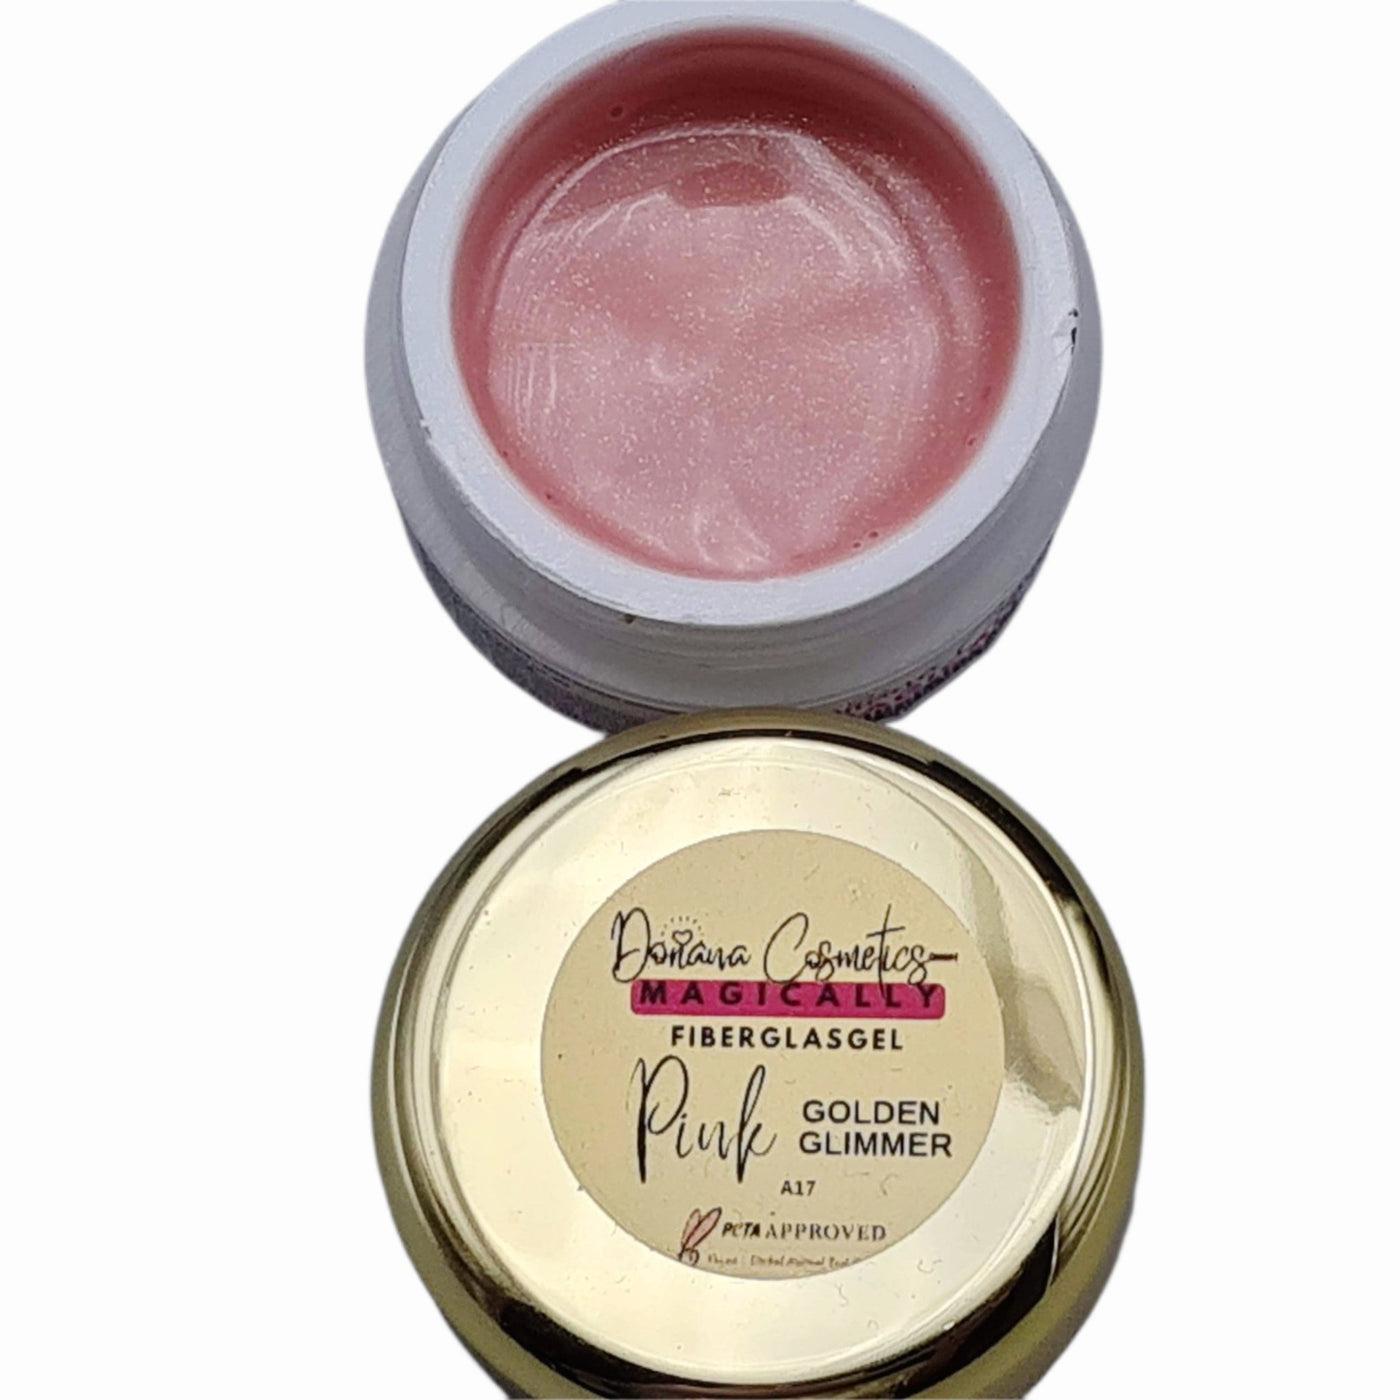 MAGICALLY Fiberglasgel - Pink Golden GLIMMER - Doriana Cosmetics GmbH